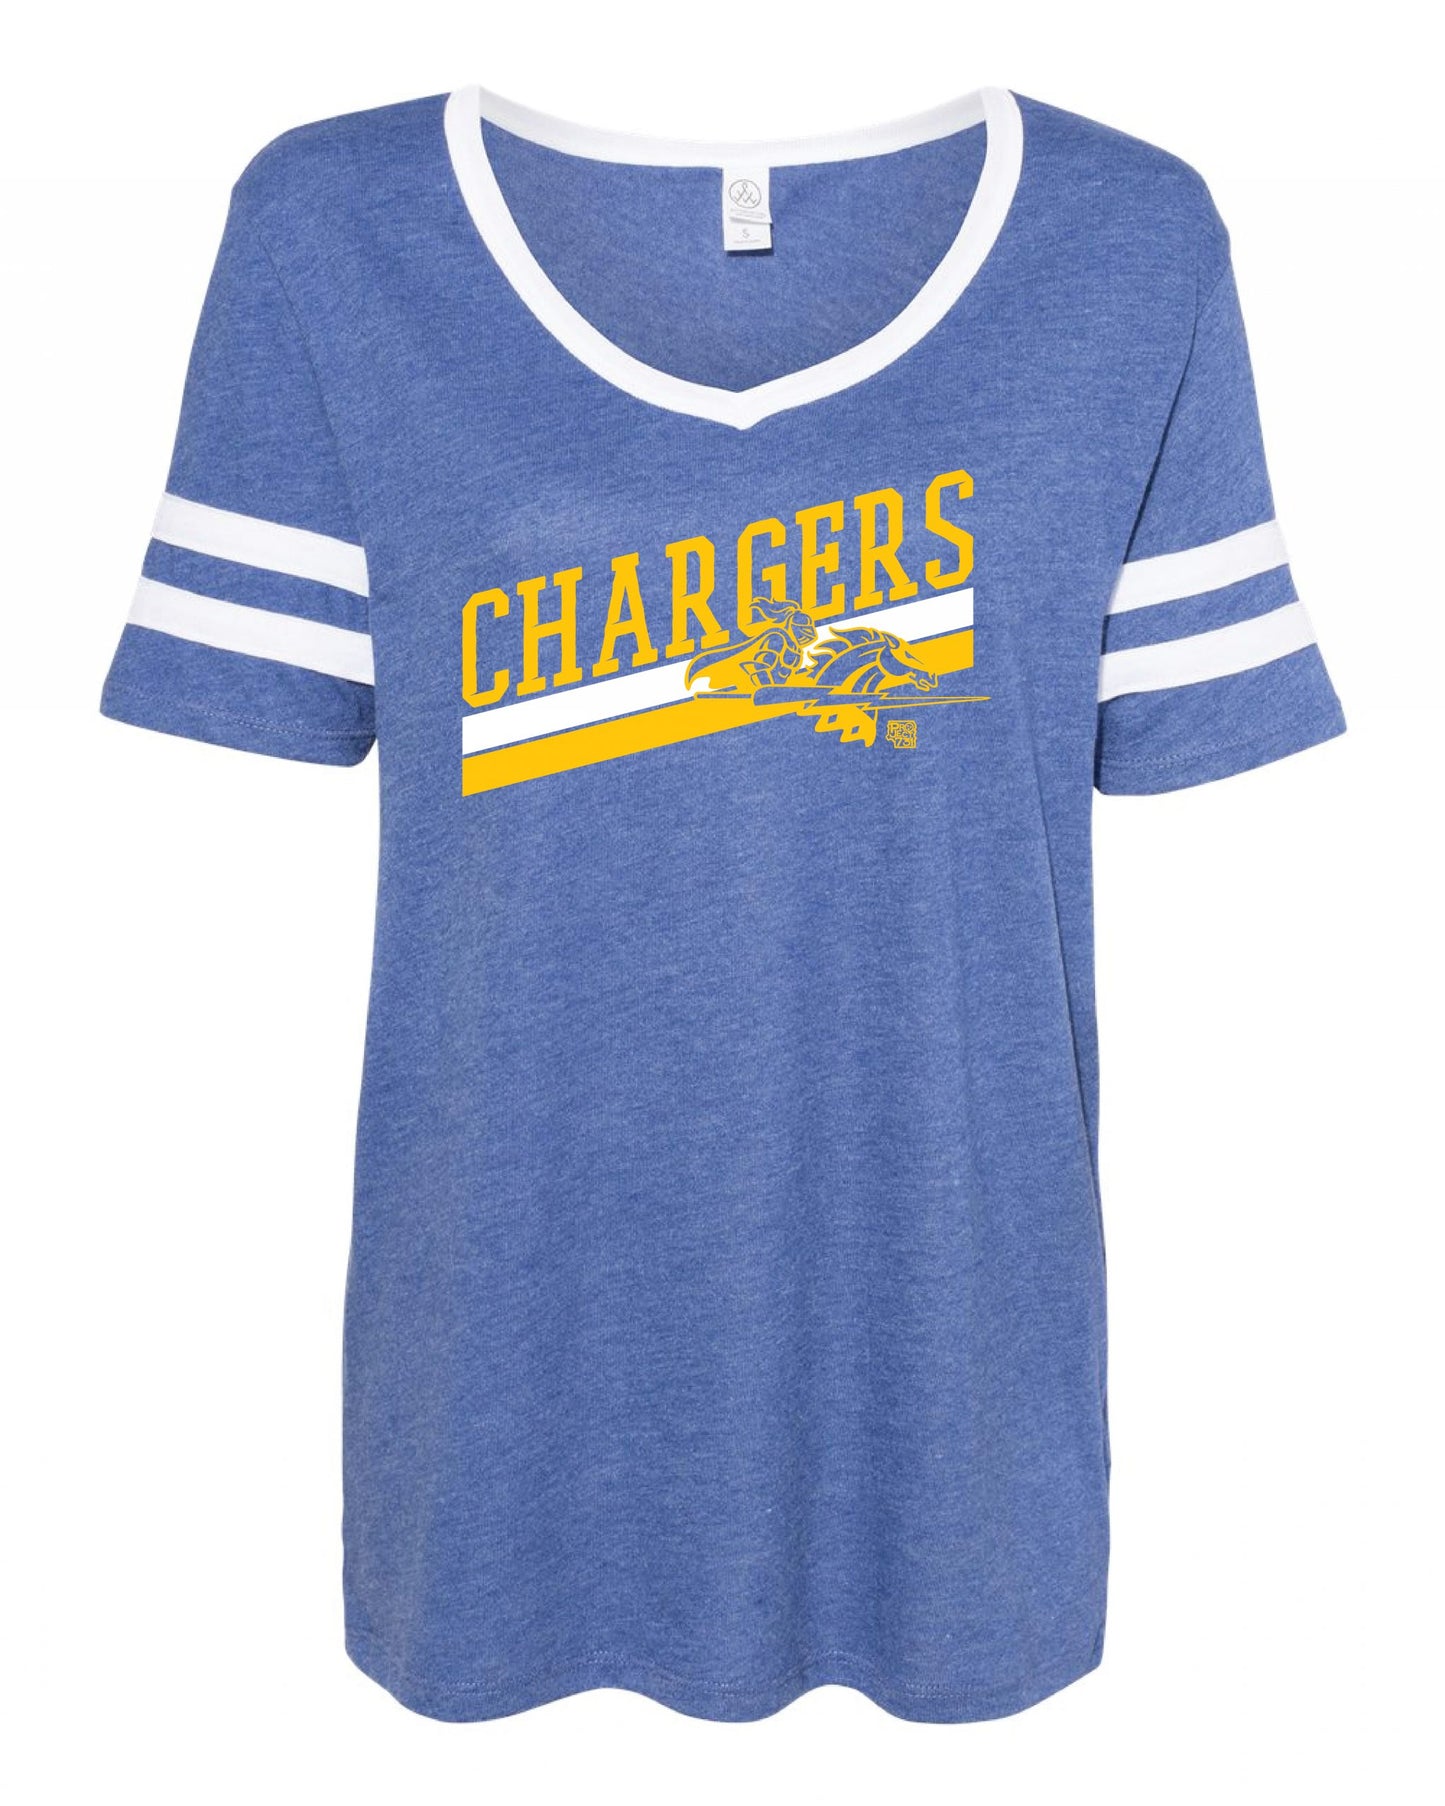 Chargers Slant Vintage Jersey T-shirt